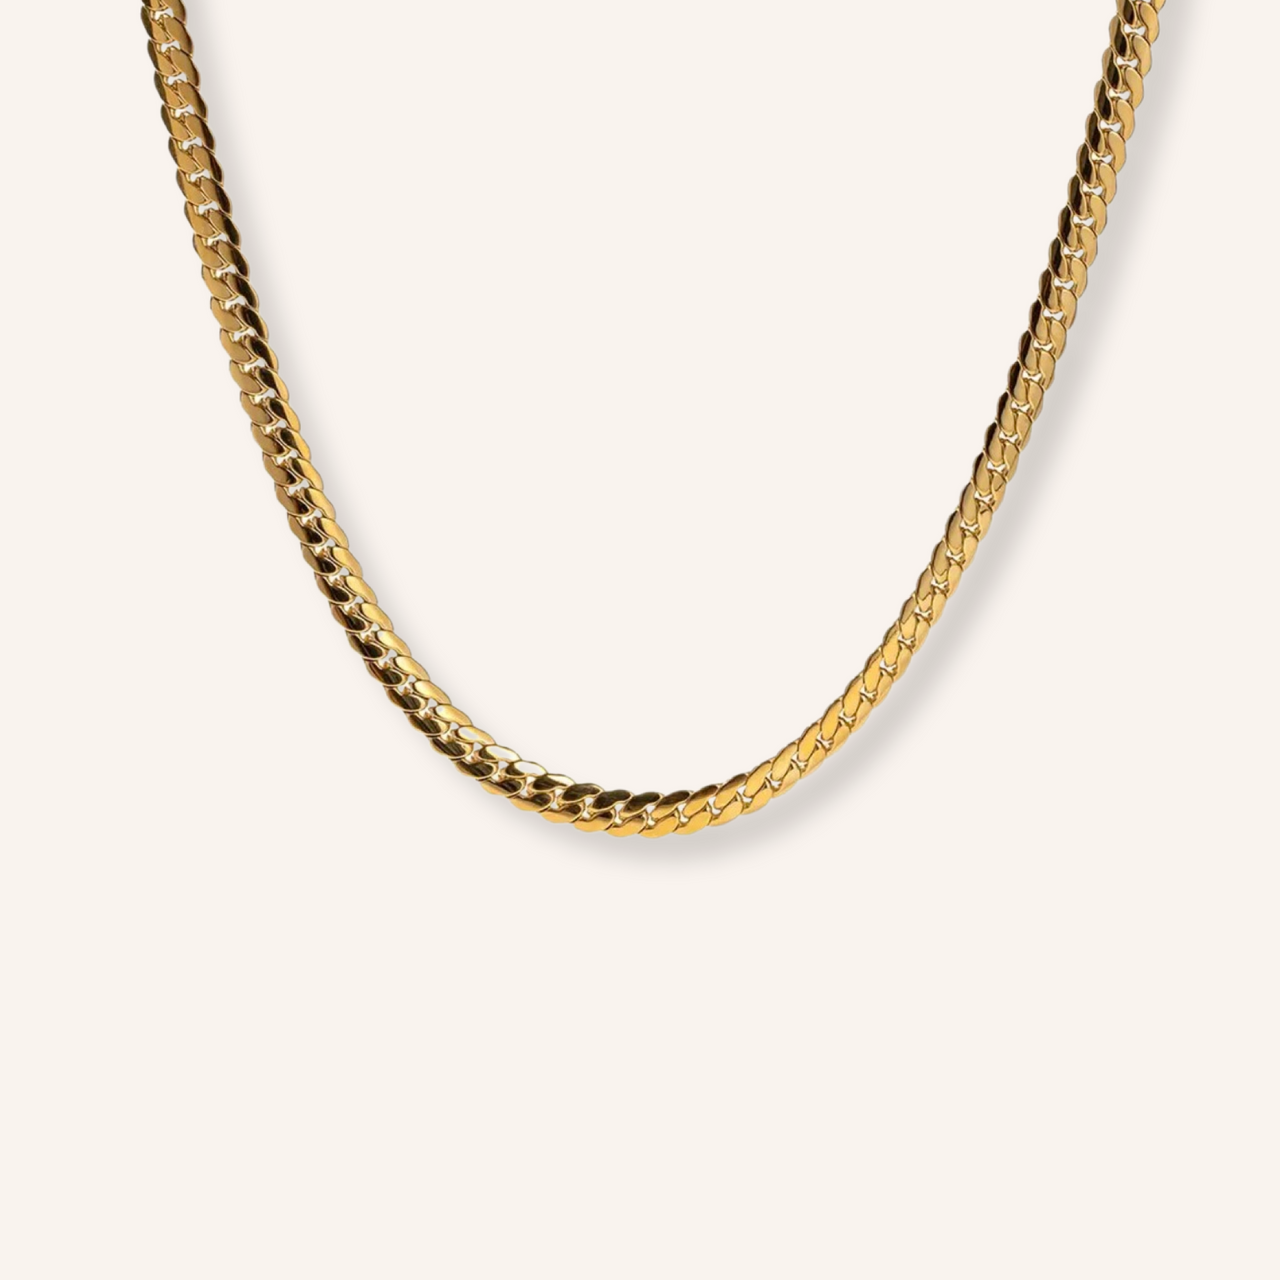 Danella gold necklace 💧